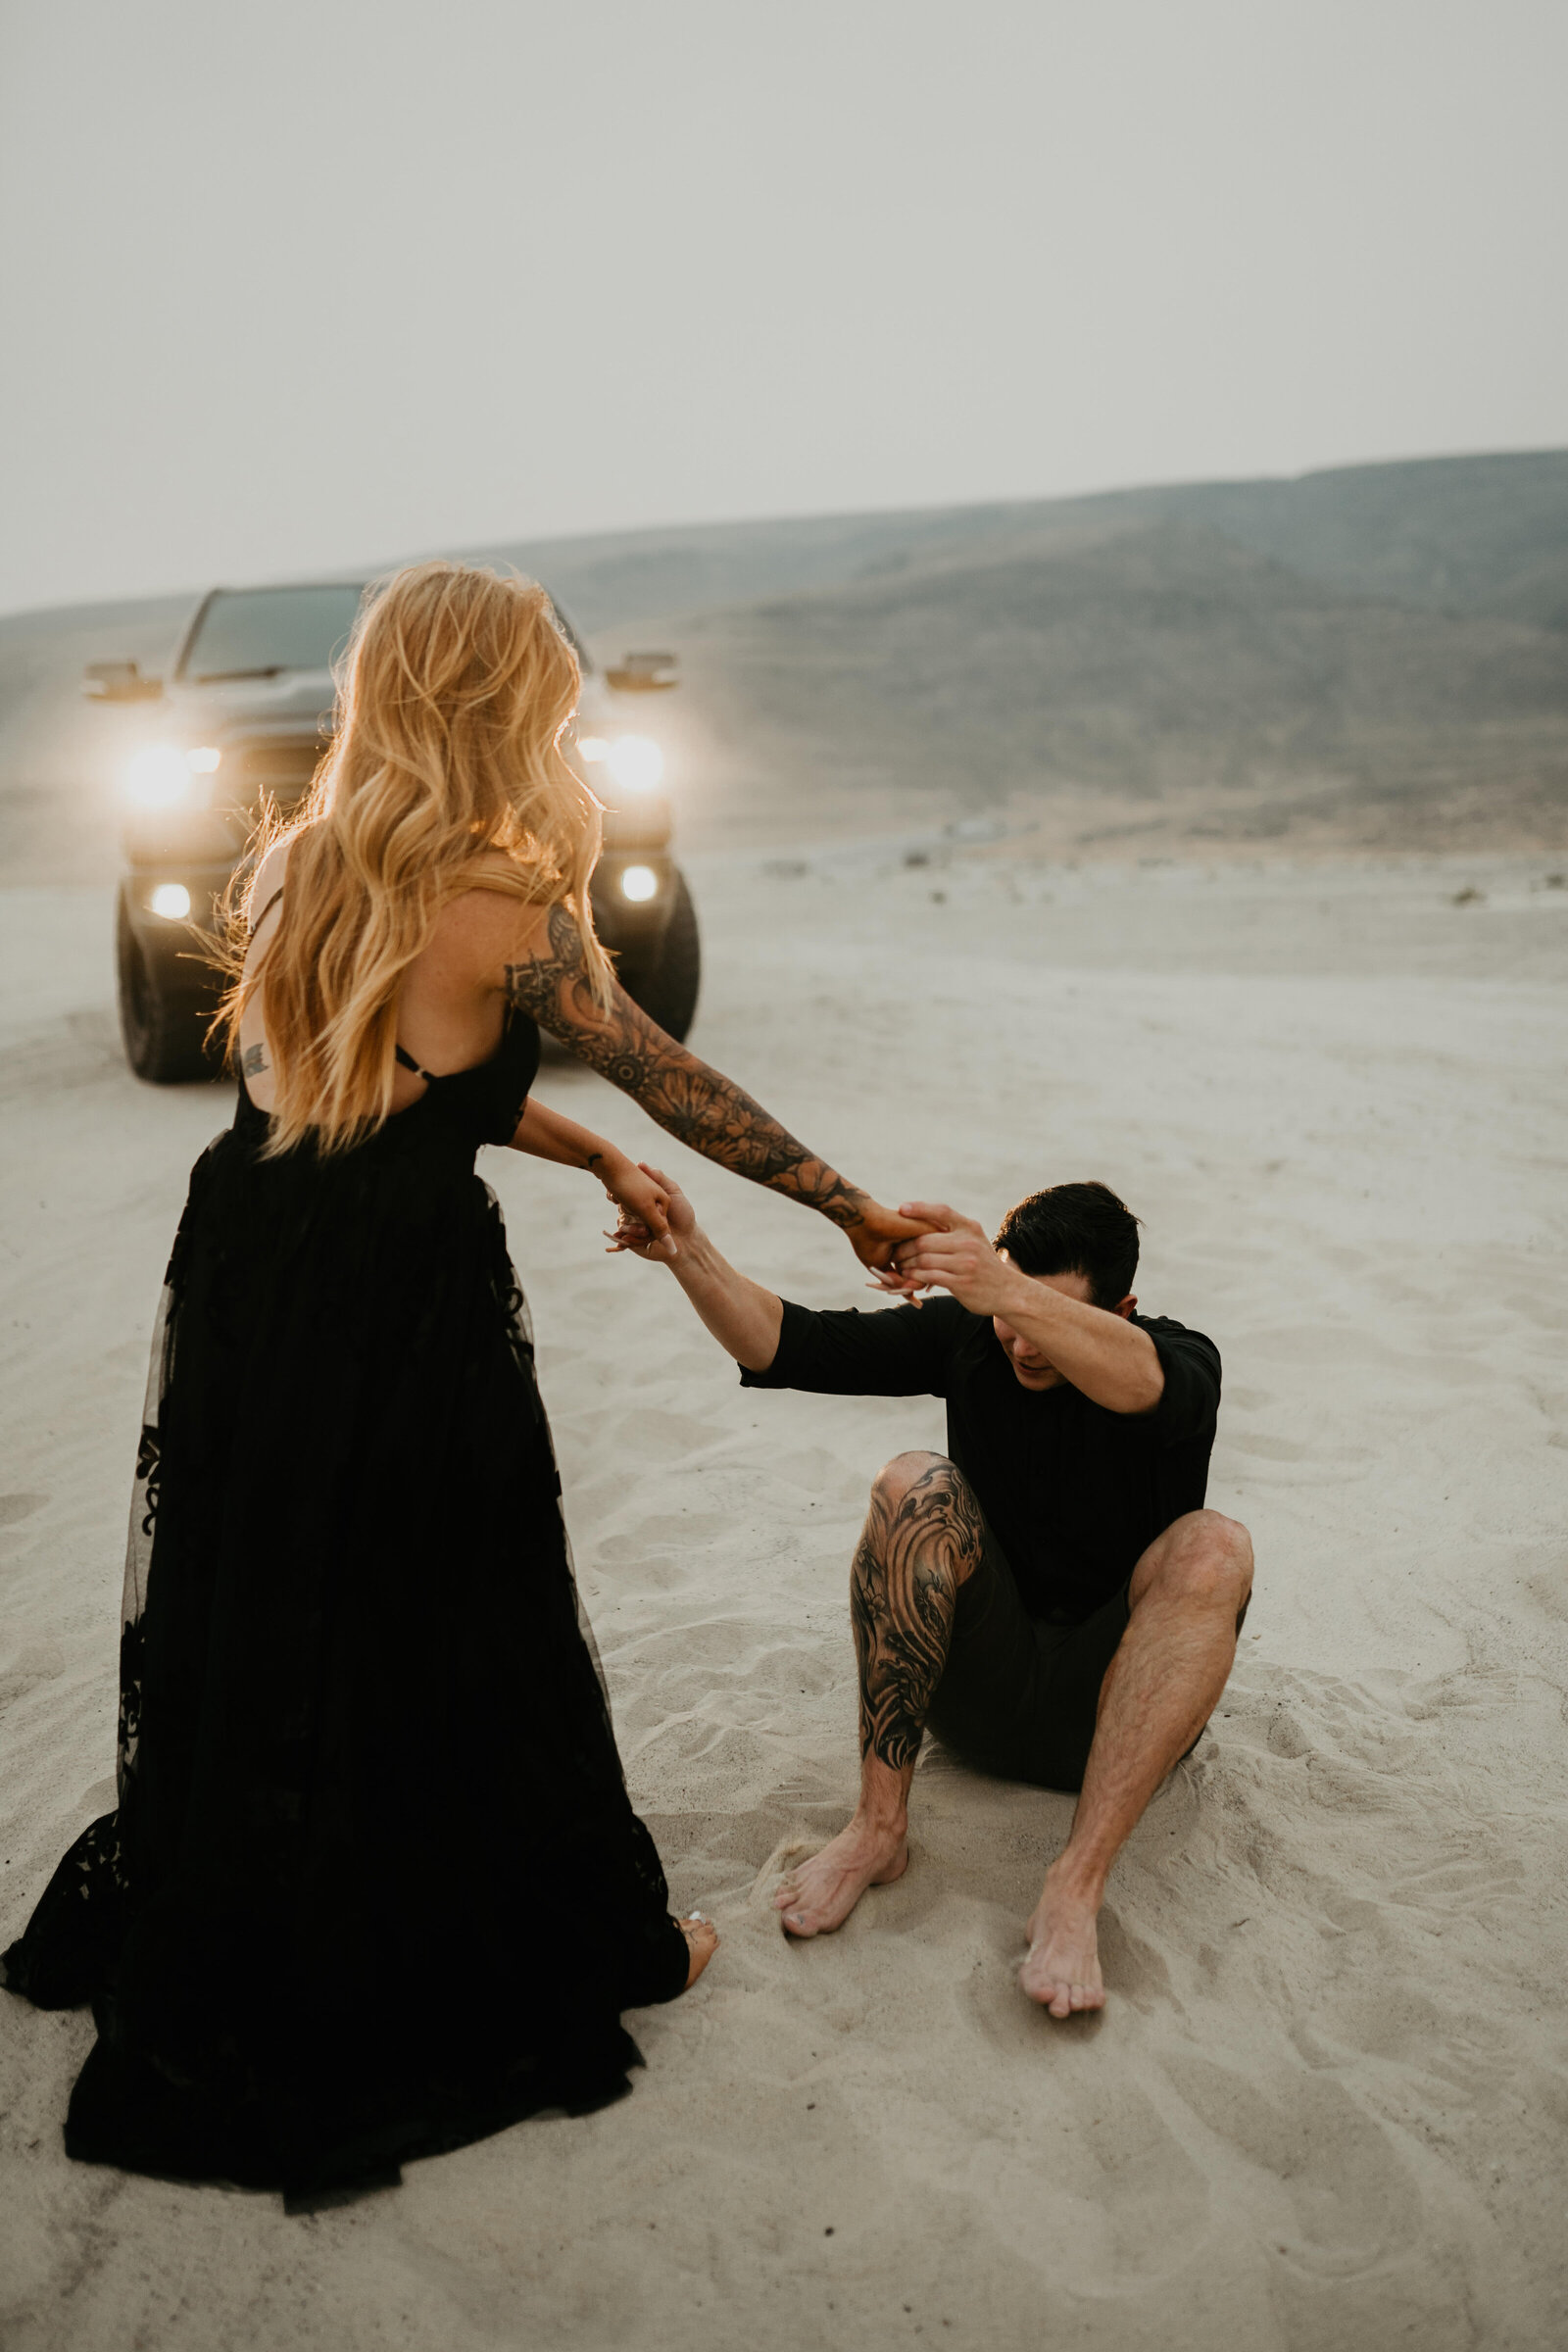 Sand Dunes Couples Photos - Raquel King Photography79